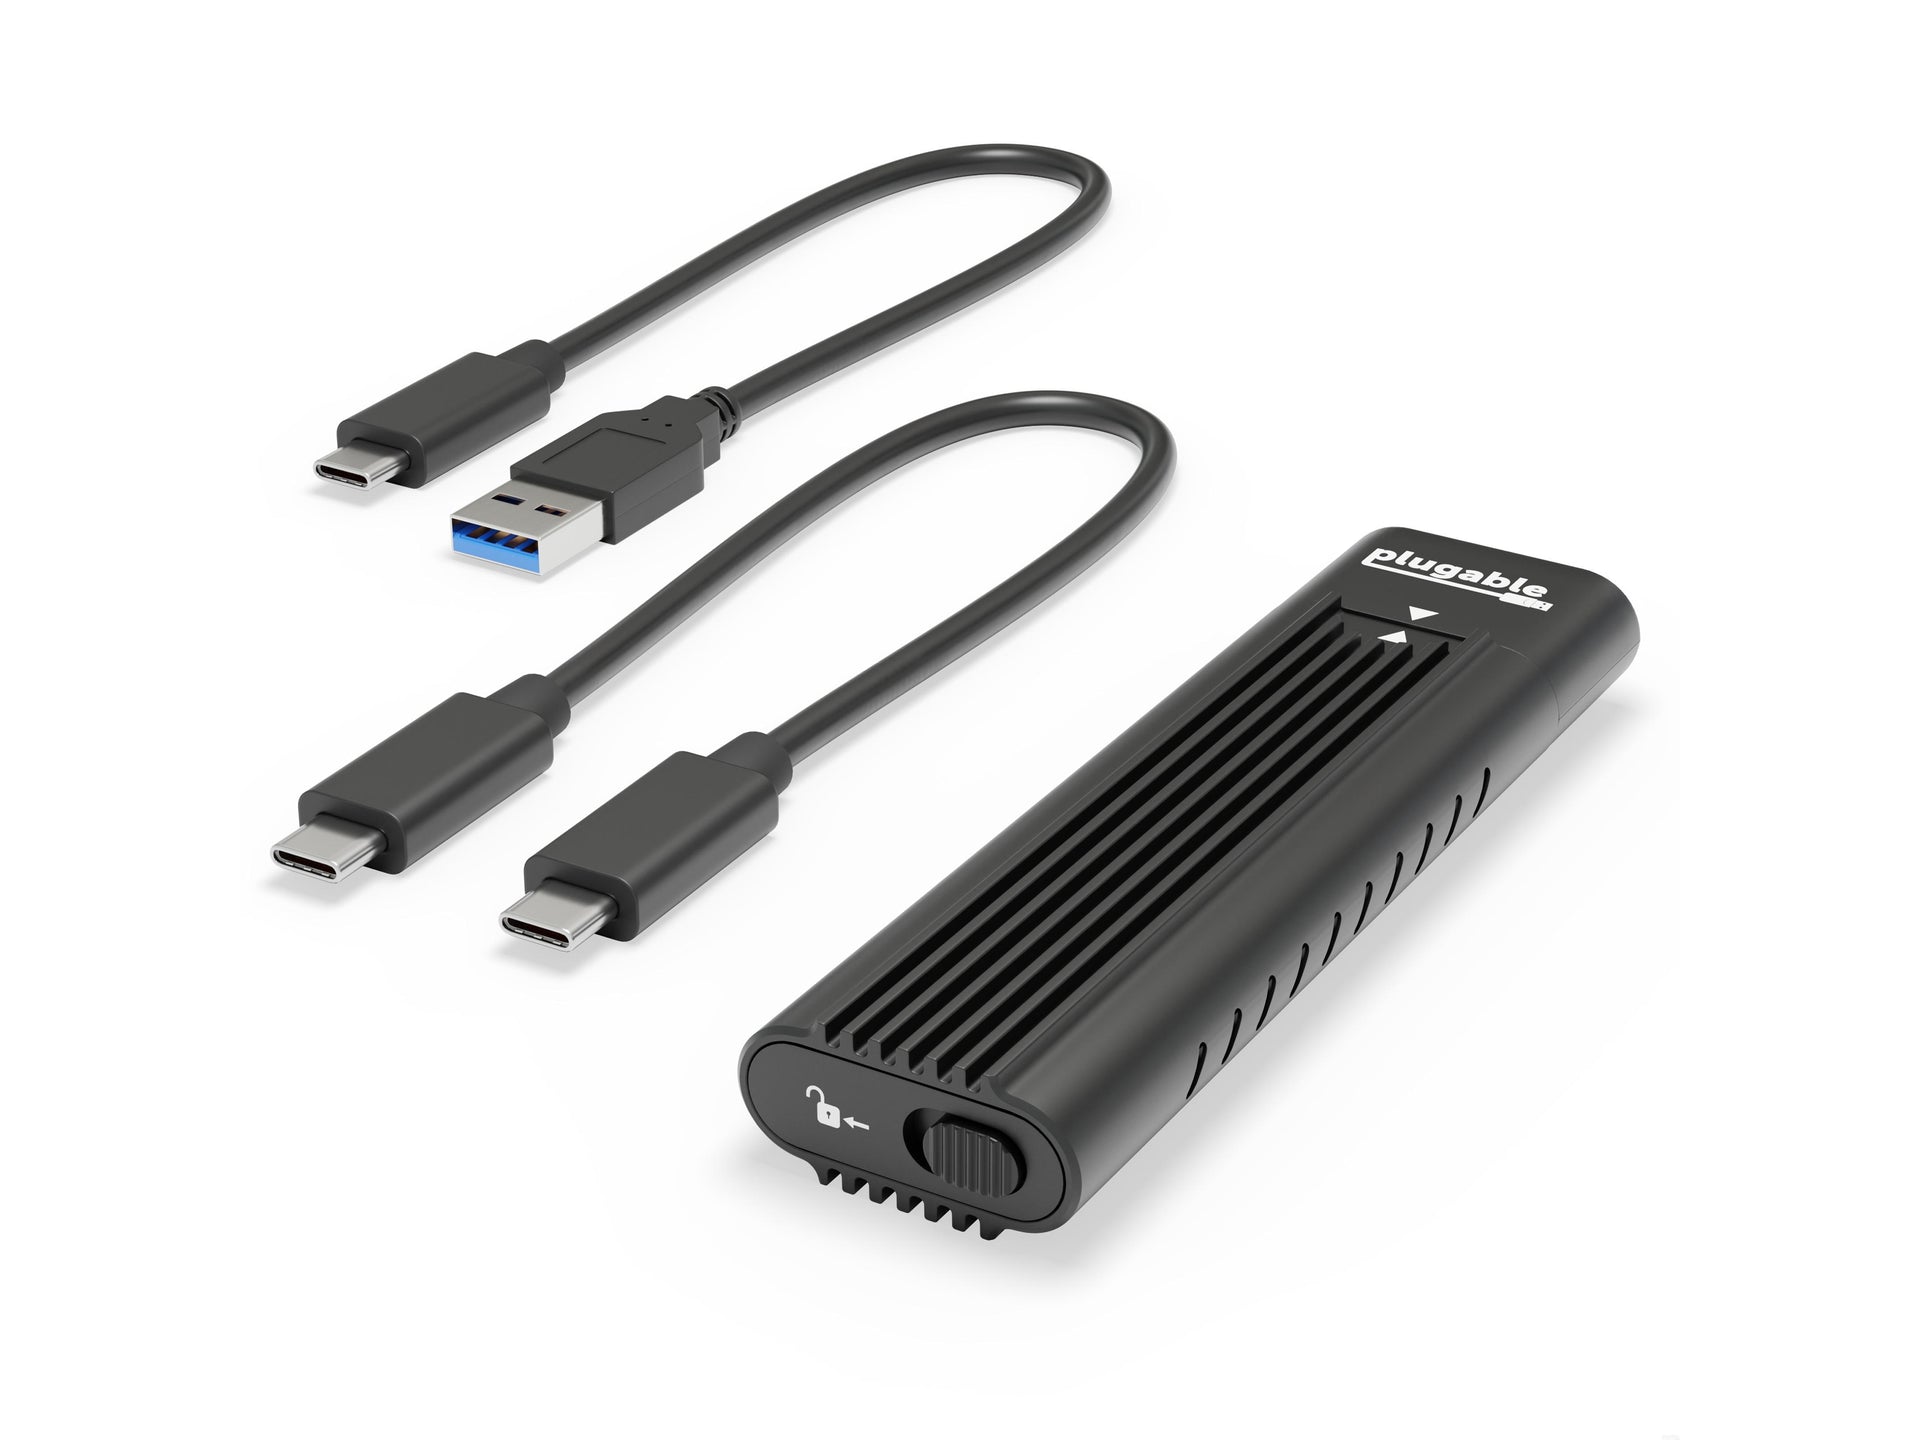 Plugable USB 3.1 Gen 2 NVMe Enclosure – Plugable Technologies